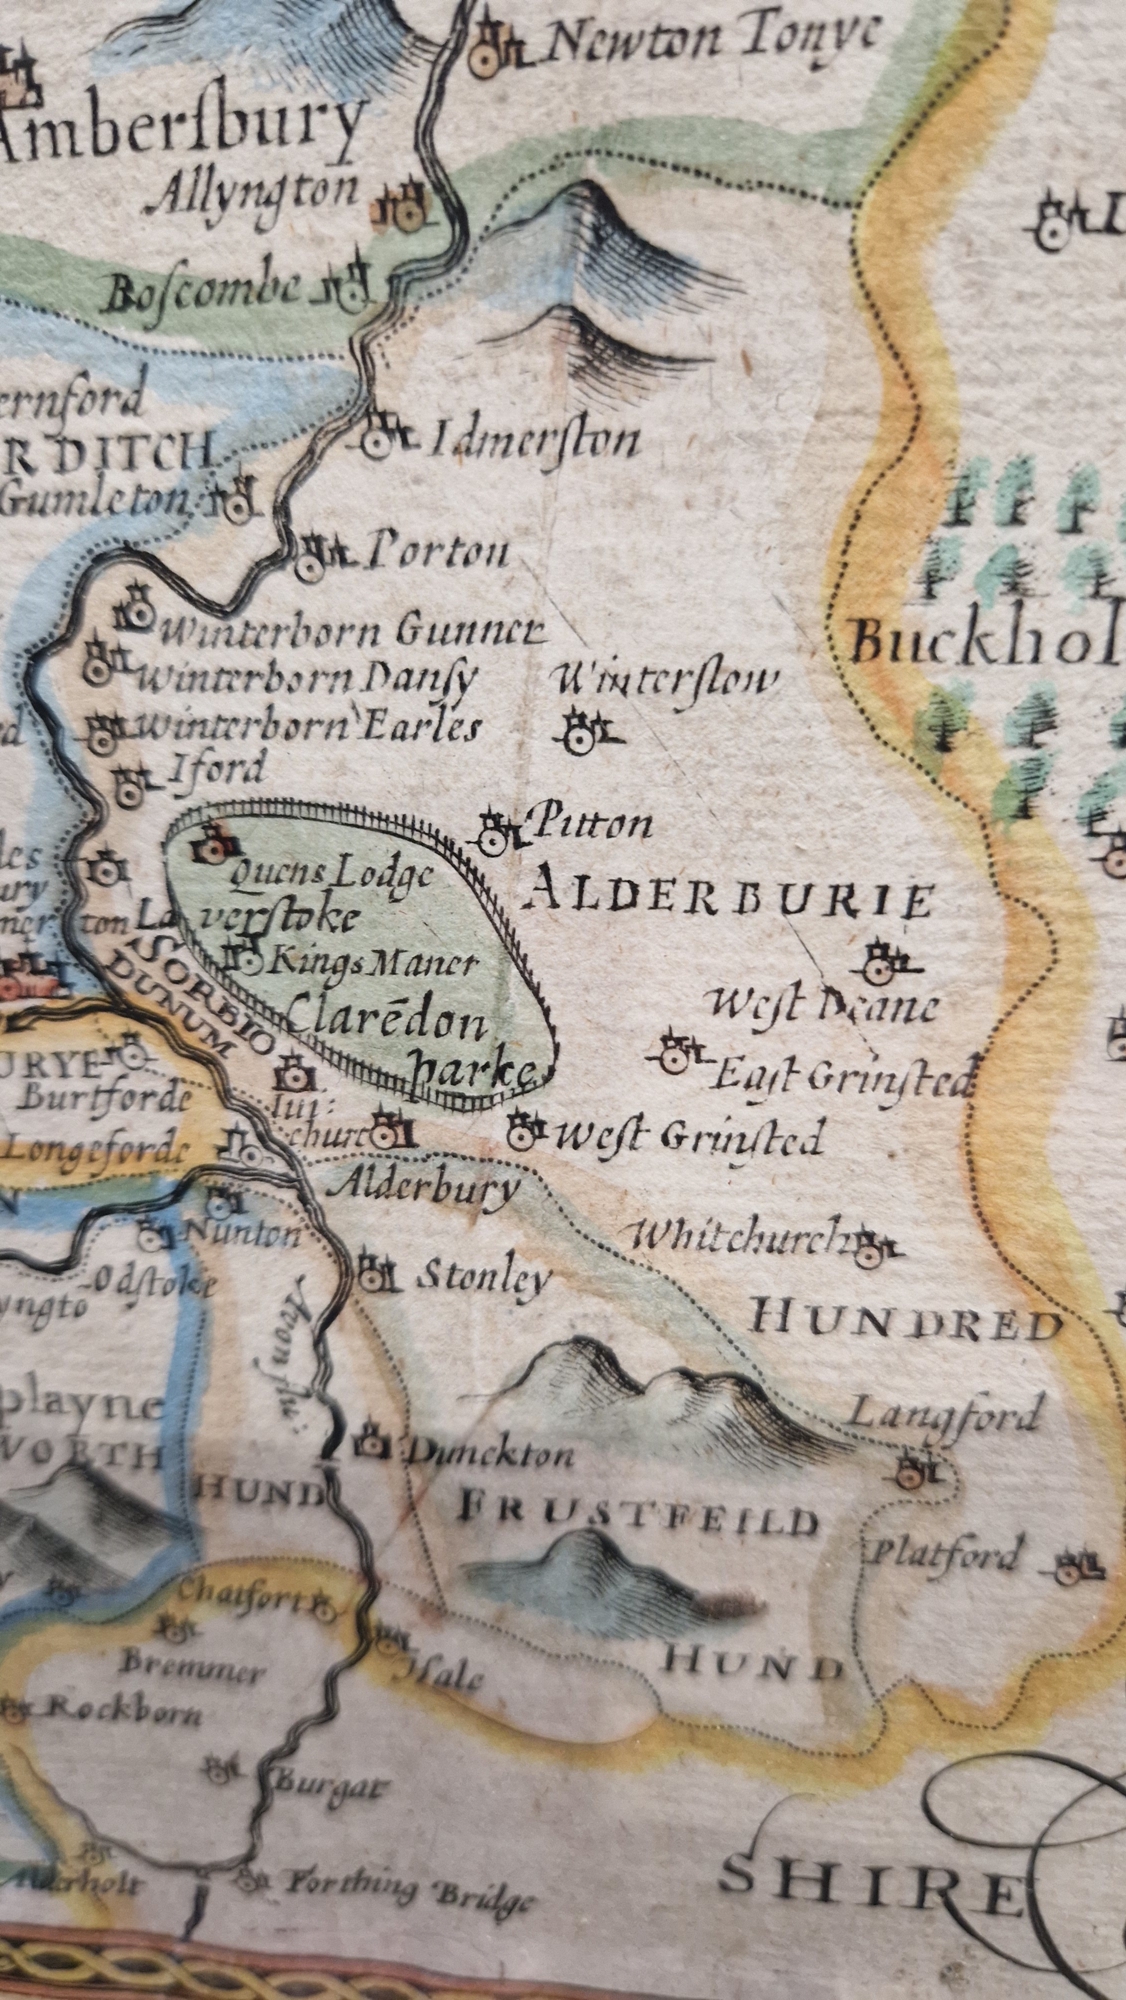 John Speed, 'Wilshire', John Sudbury & George Humble, 17th century hand coloured engraved map of - Image 19 of 33